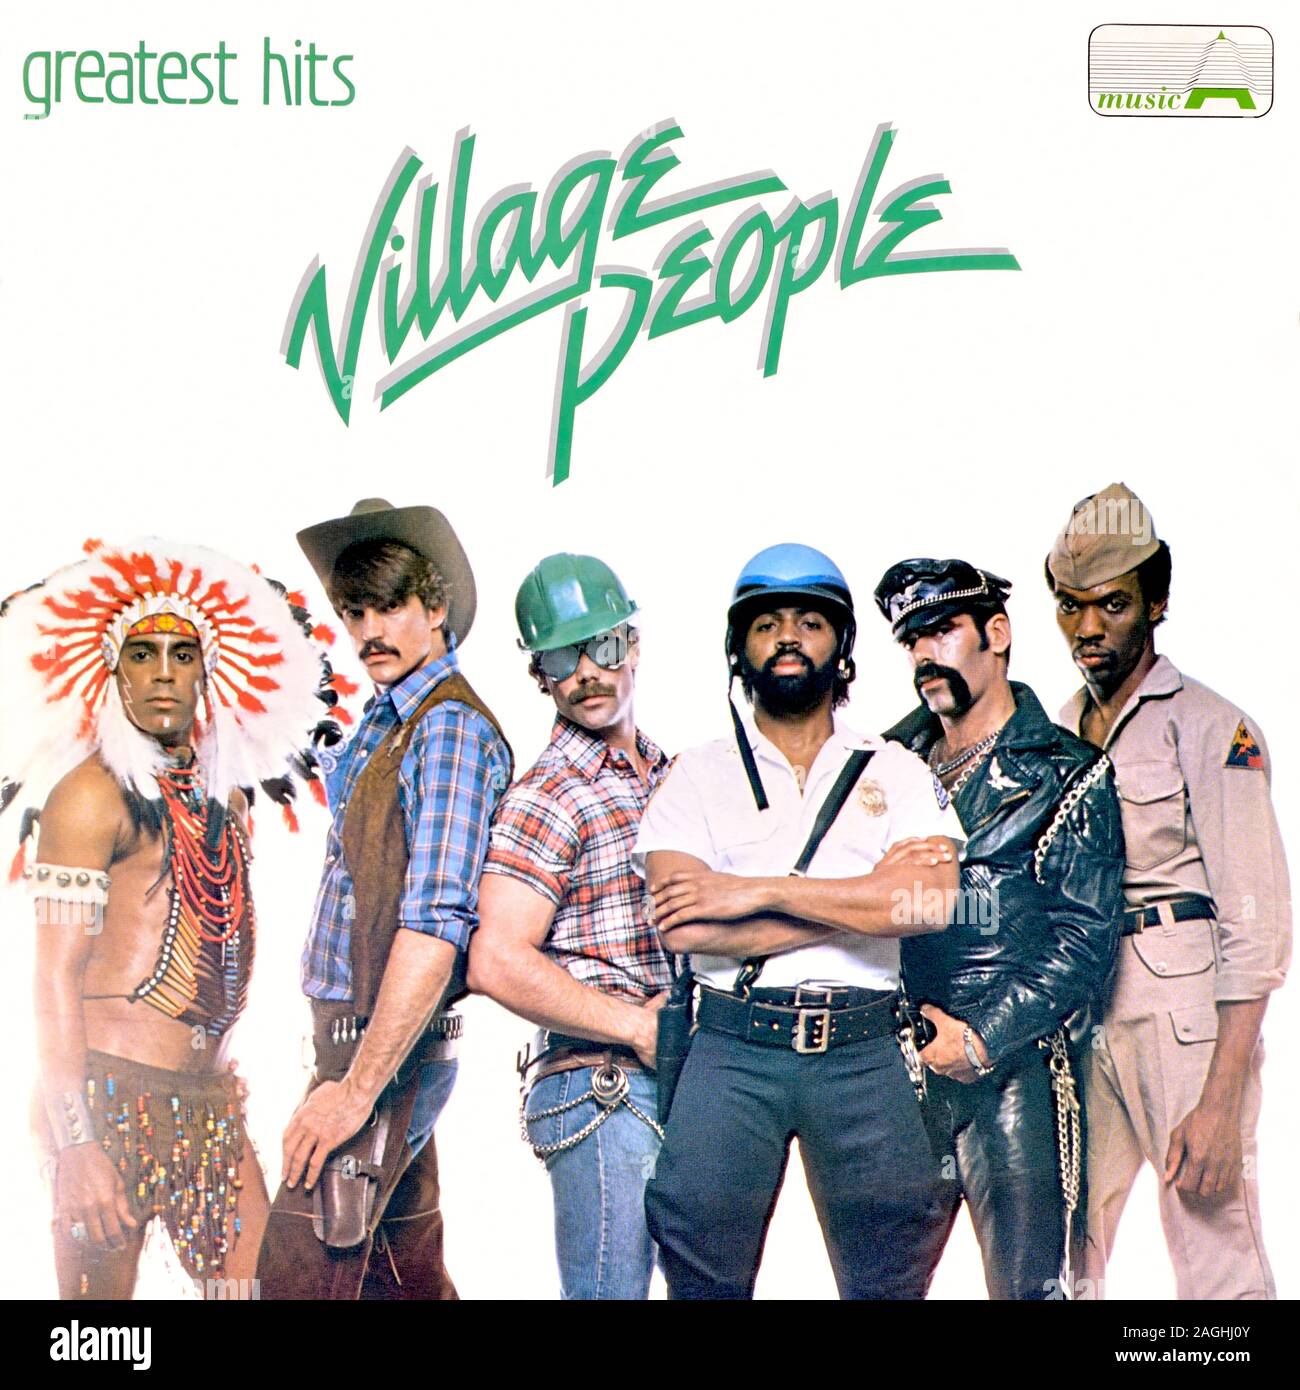 Village People - original vinyl album cover - Greatest Hits - 1983 Stock Photo